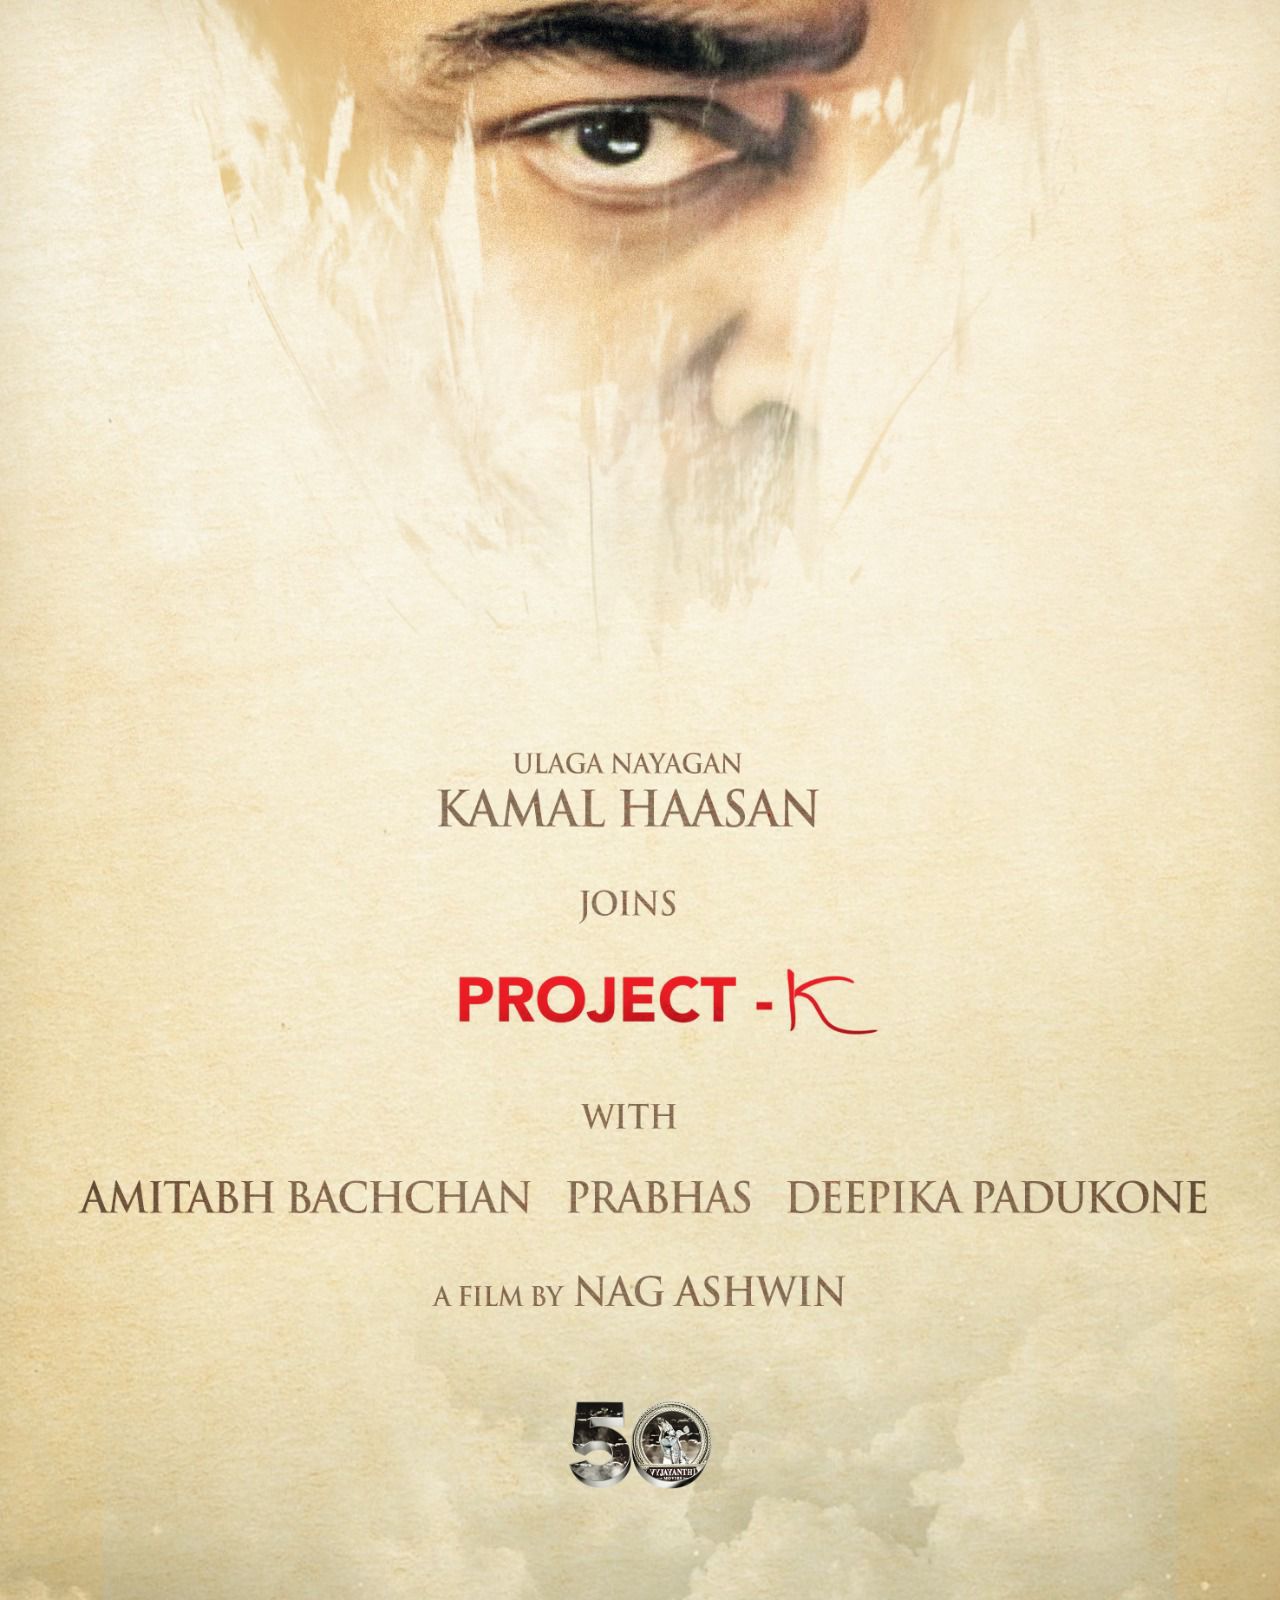 Huge! Ulaganayagan Kamal Haasan joins Prabhas - Deepika Padukone starrer ‘Project K’, making it the greatest casting coup ever in Indian cinema.